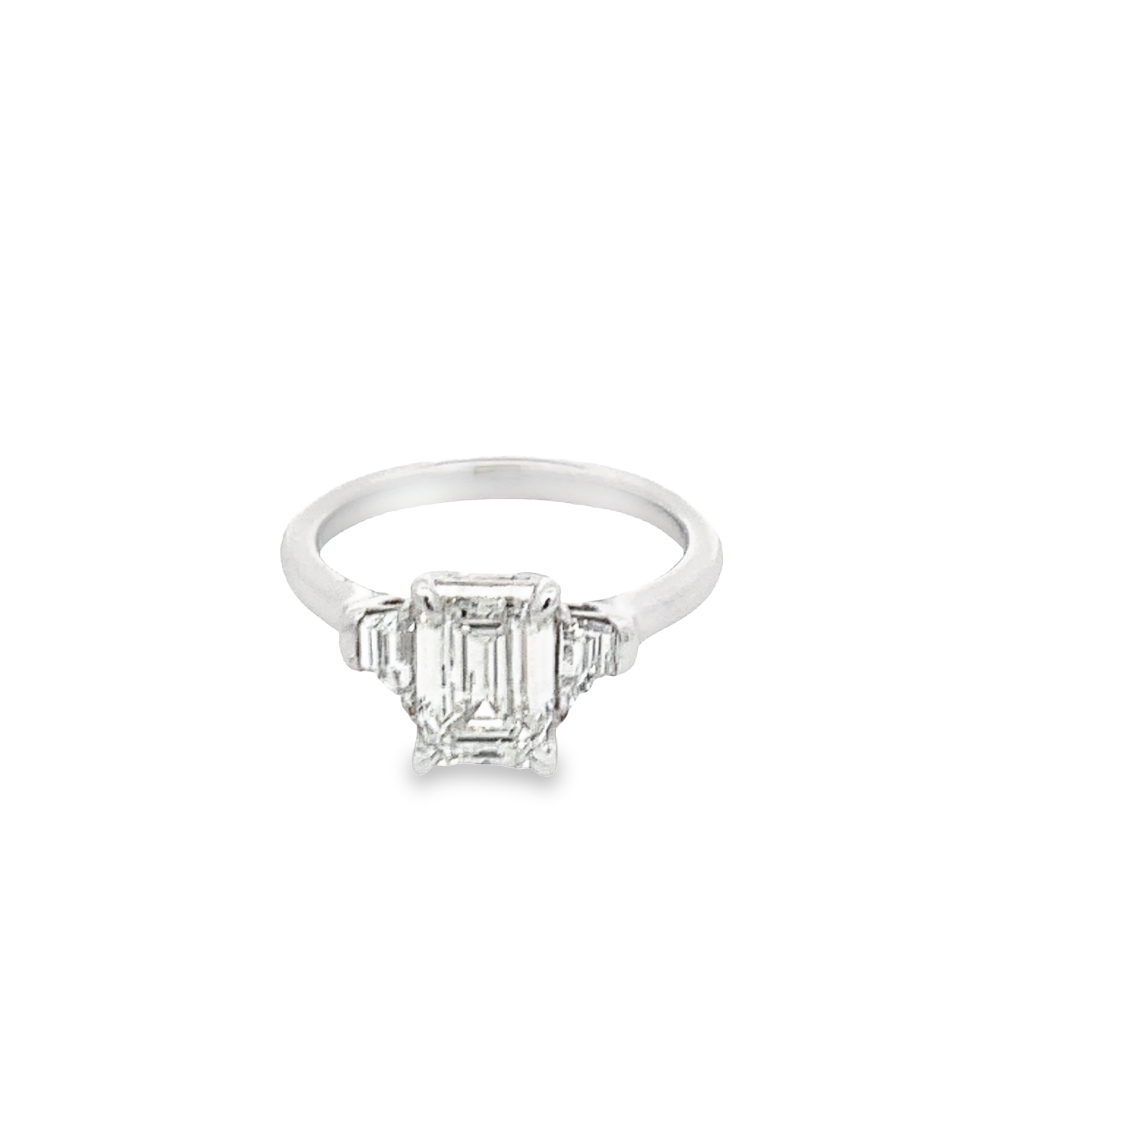 14K White Gold Engagement Ring with 1 Lab Grown Emerald Cut Diamond 2.00 TCW G VVS2 IGI LG575379951 & 2 Lab Grown Trapezoid Cut Diamonds 0.43 TCW G VS